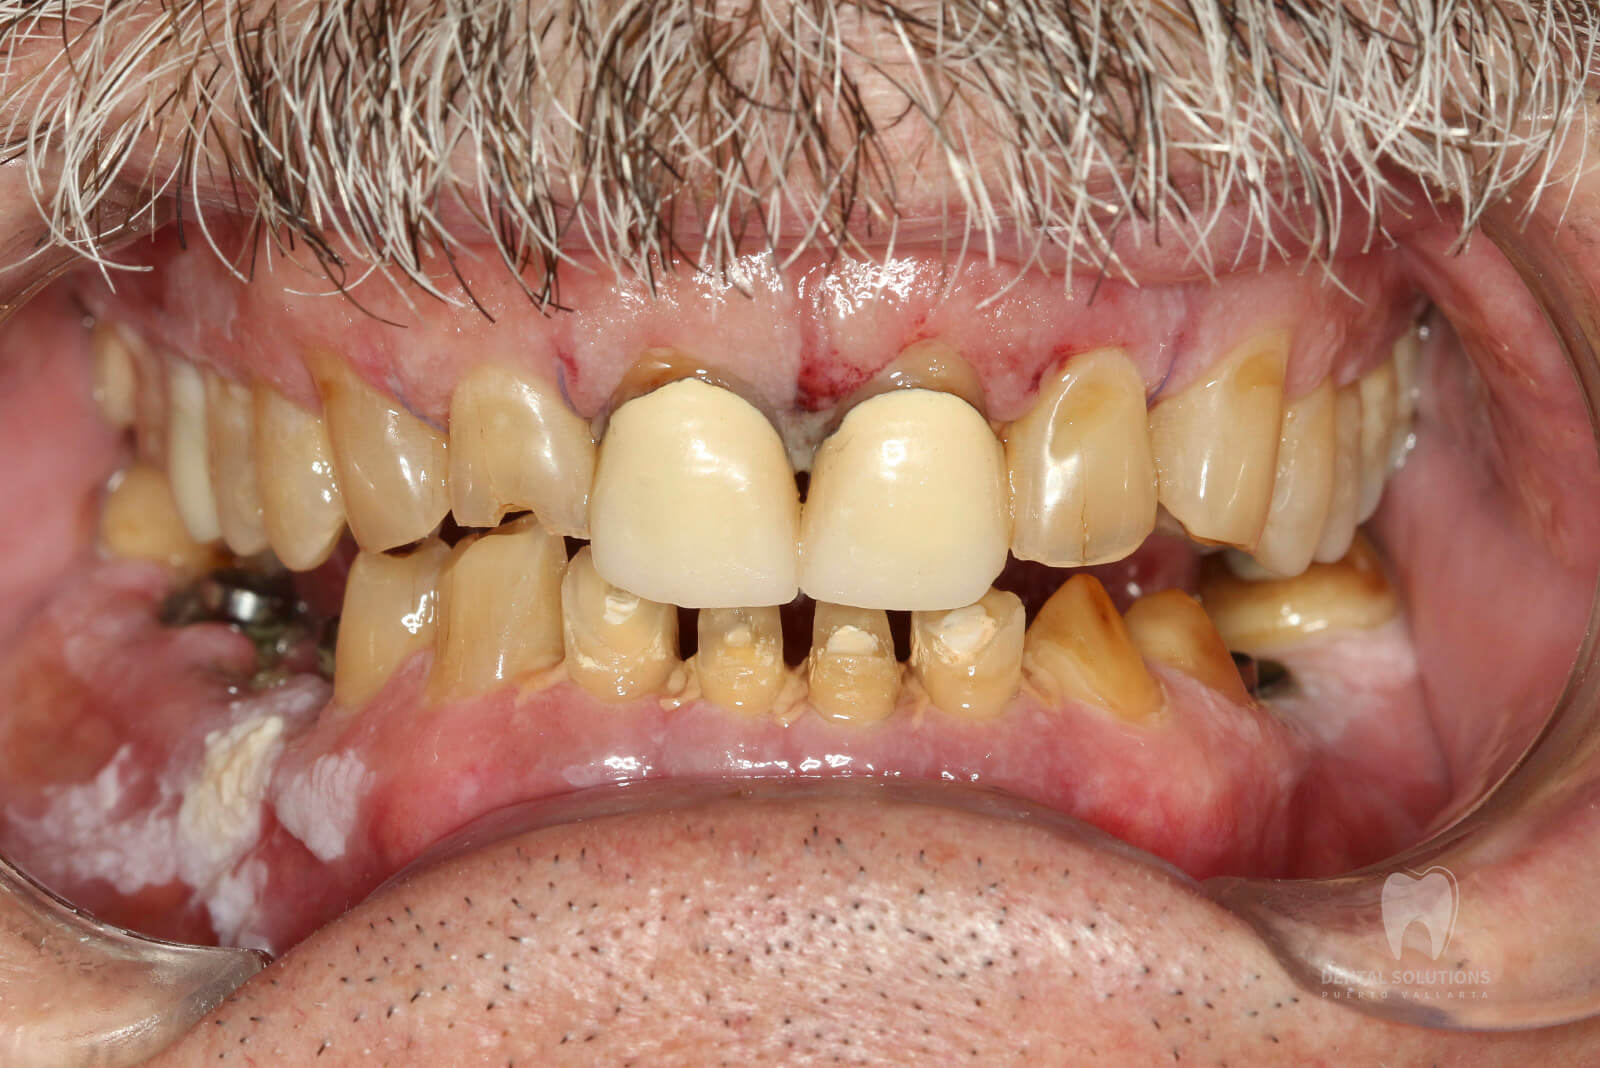 severe worn teeth